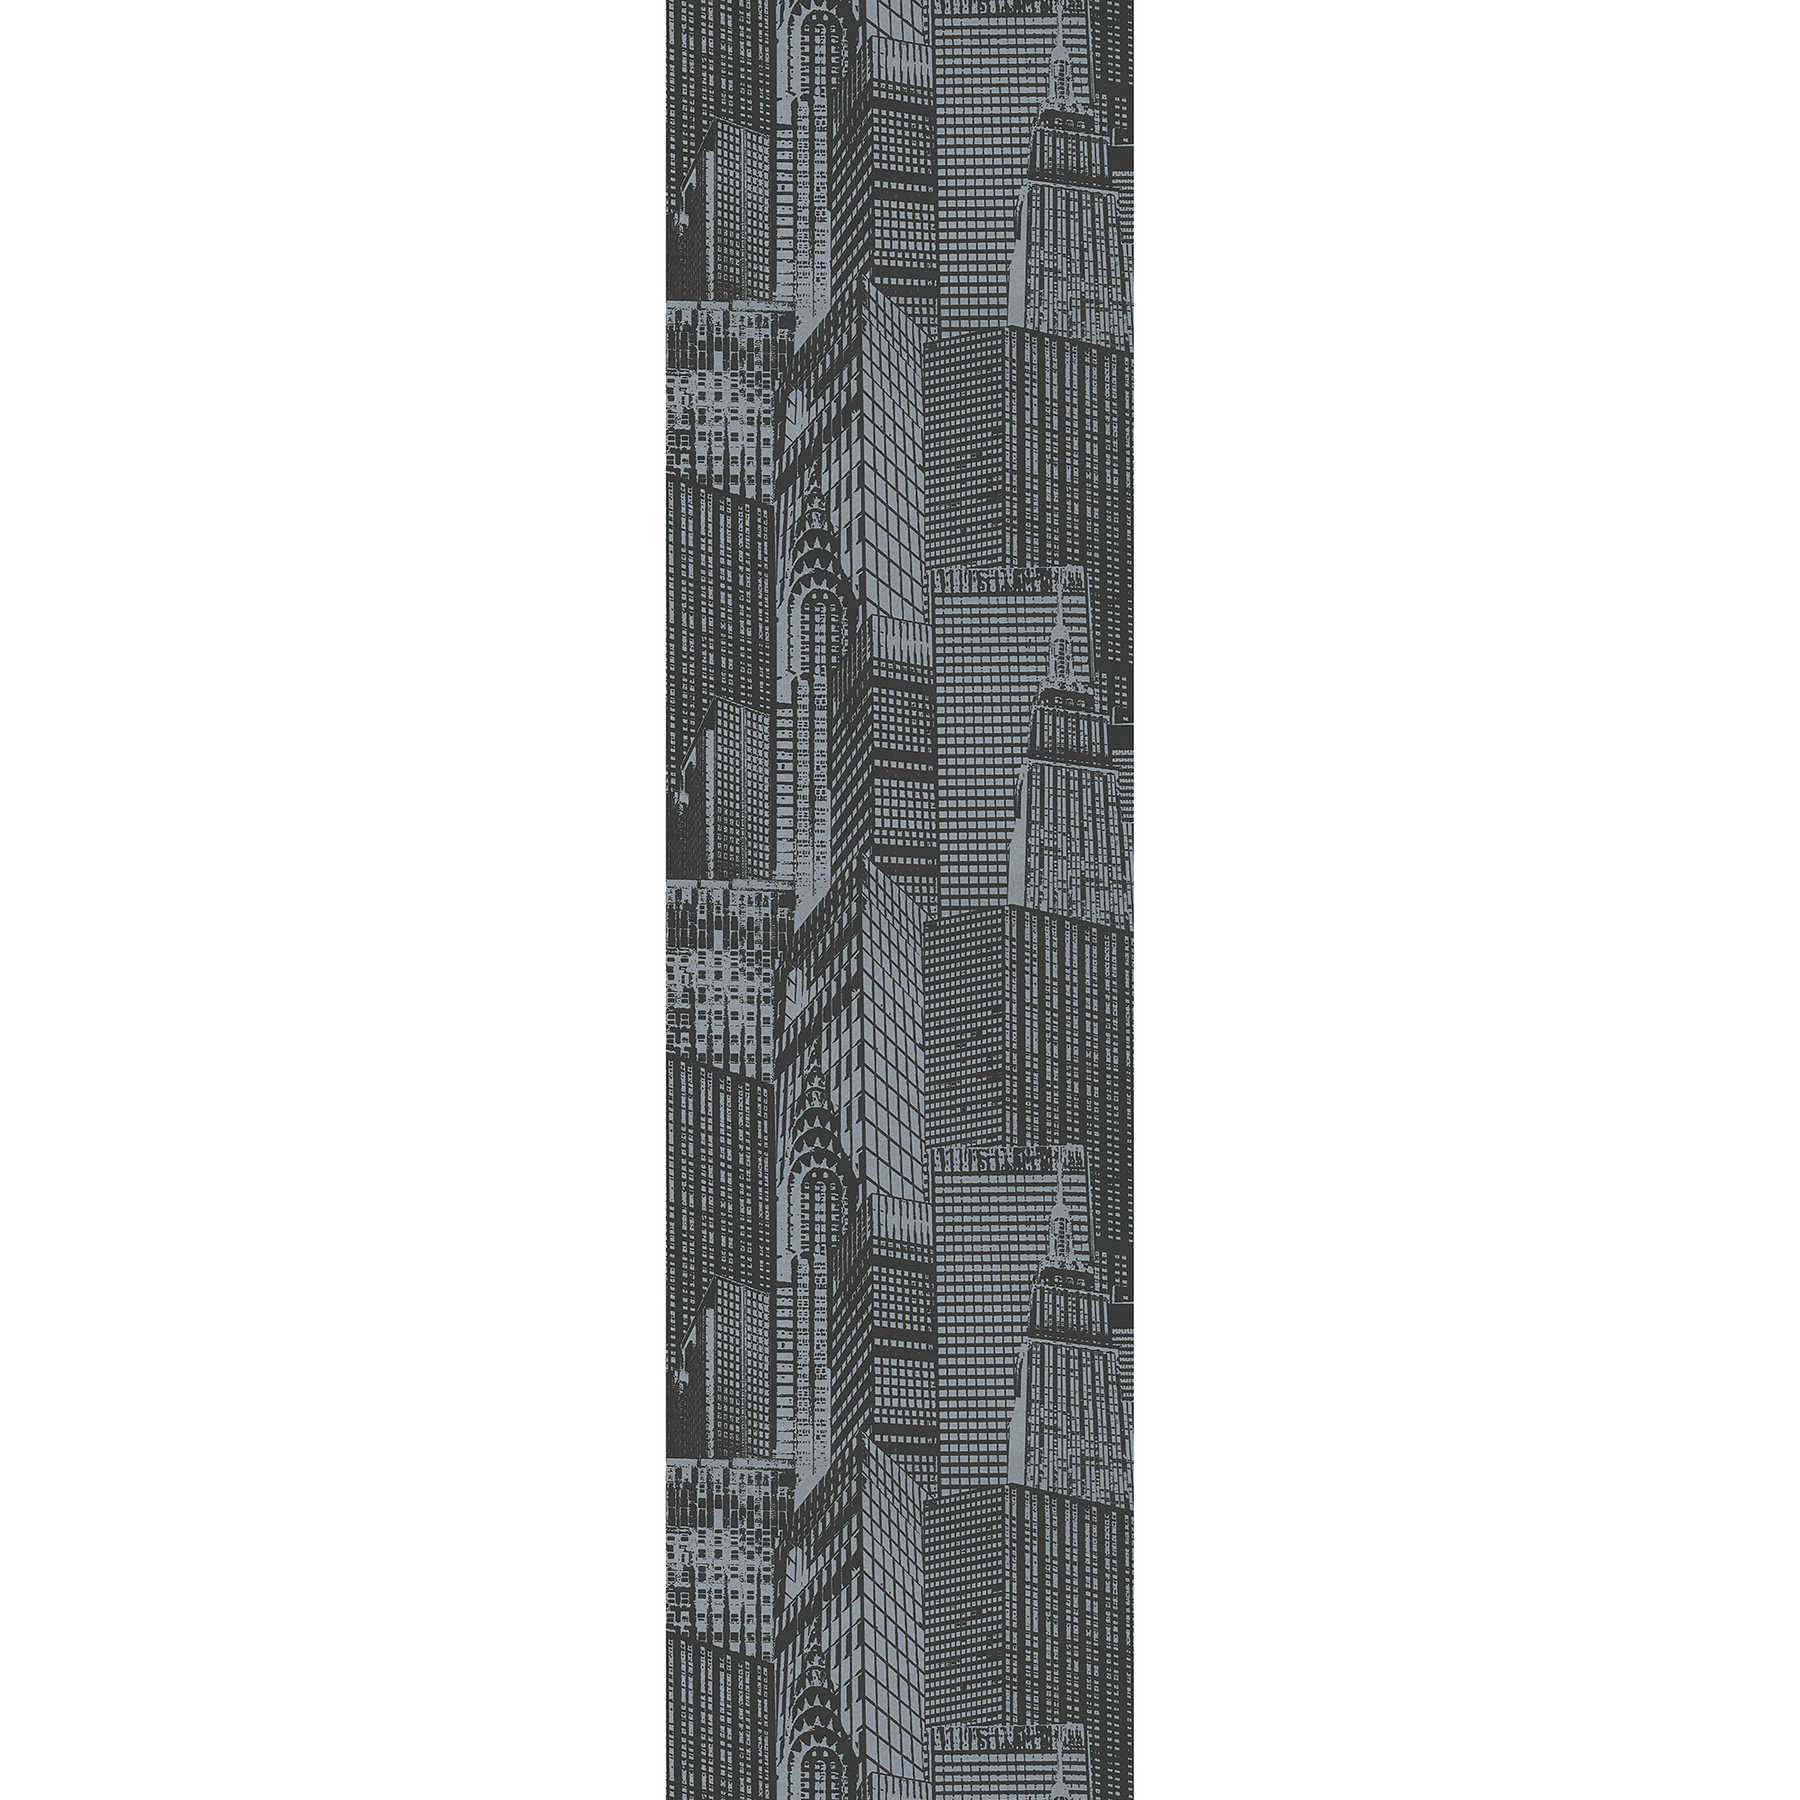         Tapetenpanel New York Skyline selbstklebend – Grau, Schwarz
    